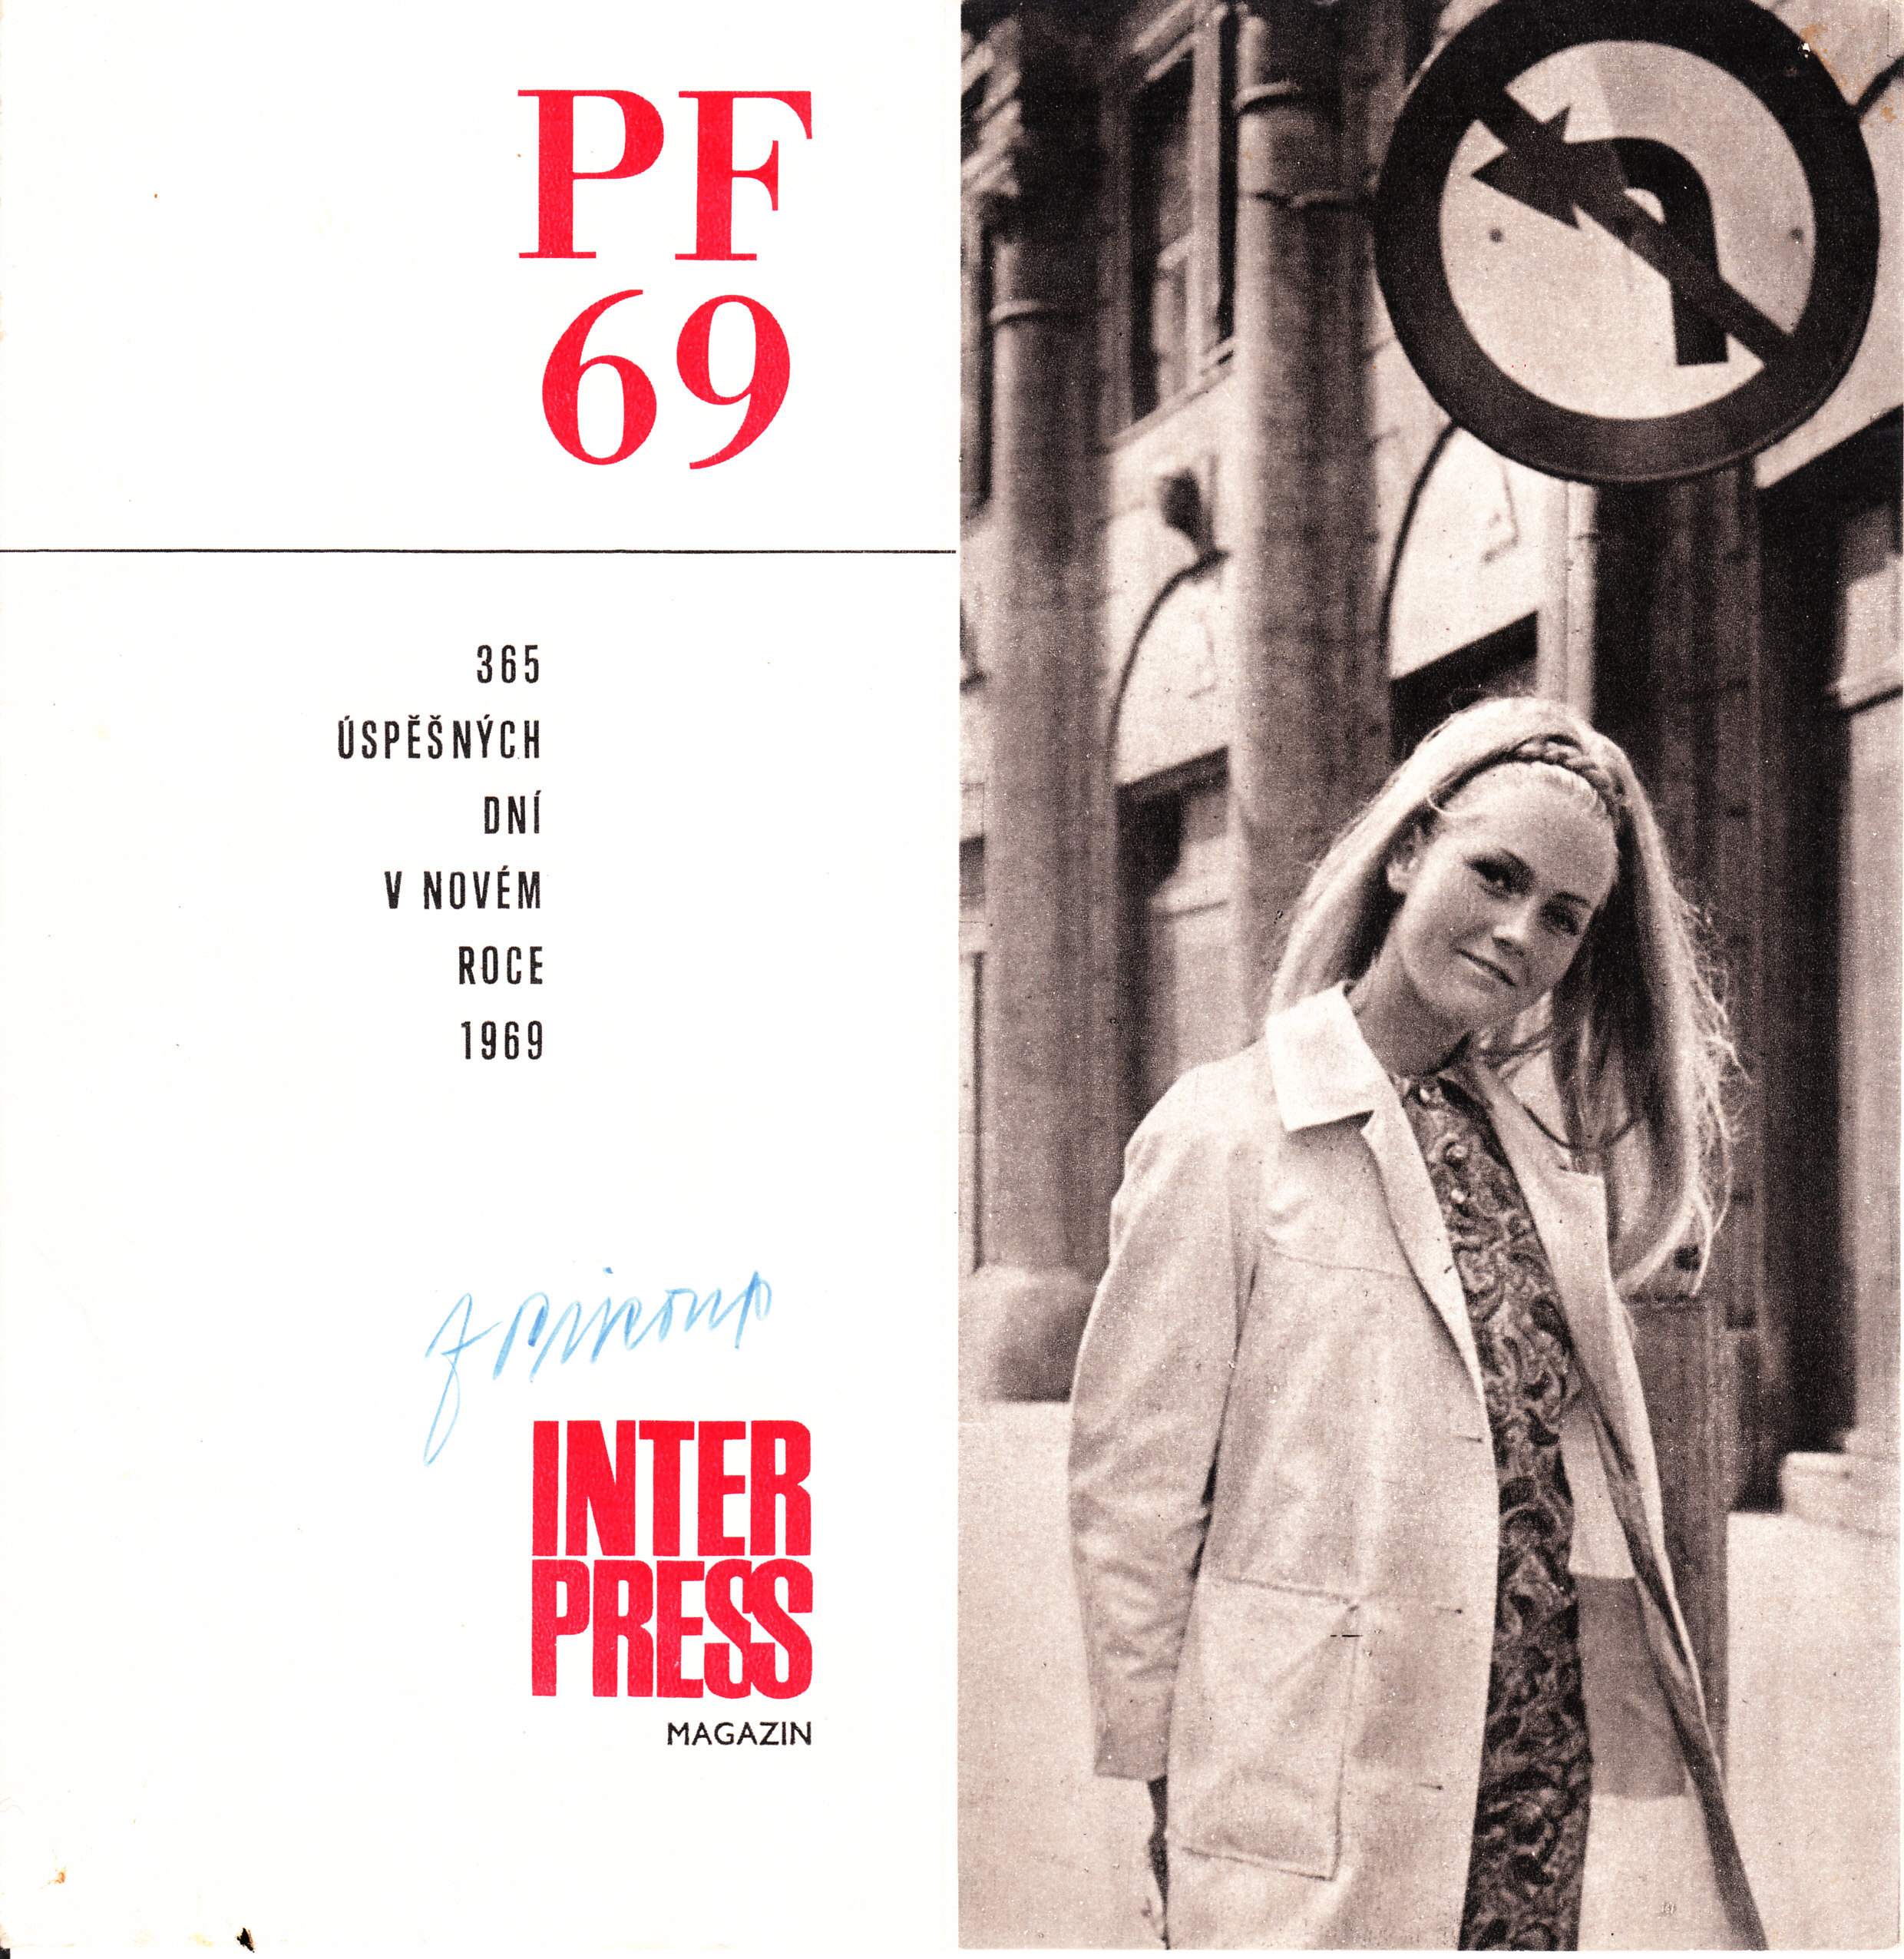 1968-Interpress magazín PF 1969 (Zákaz odbočení vlevo).jpg